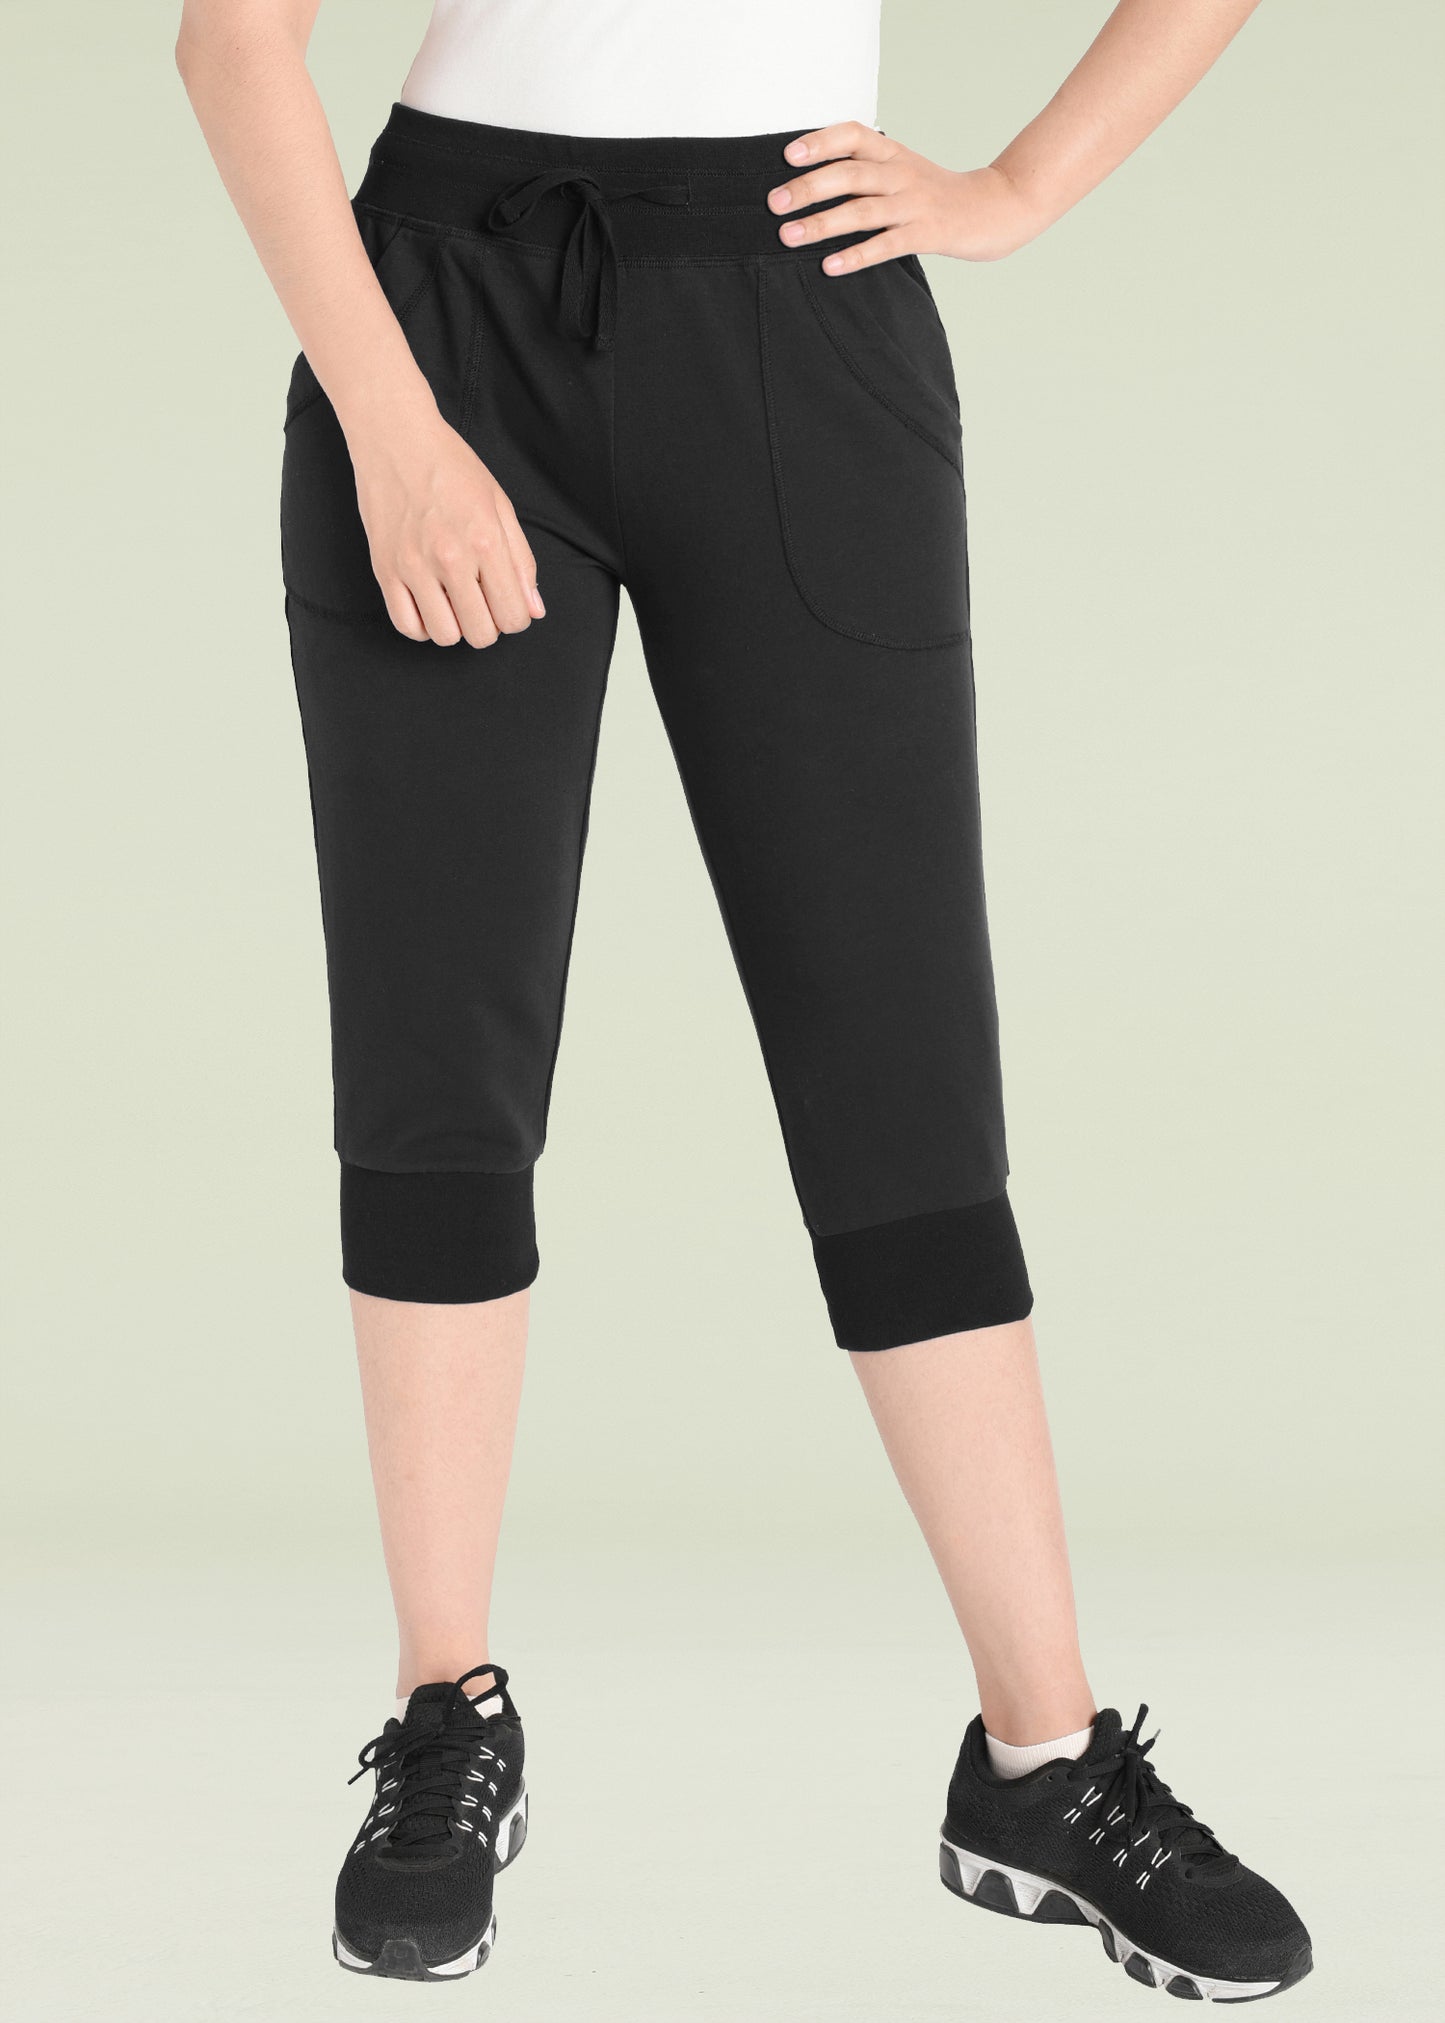 Women's Cotton Sweatpants Jersey Capri Pants with Pockets – Latuza